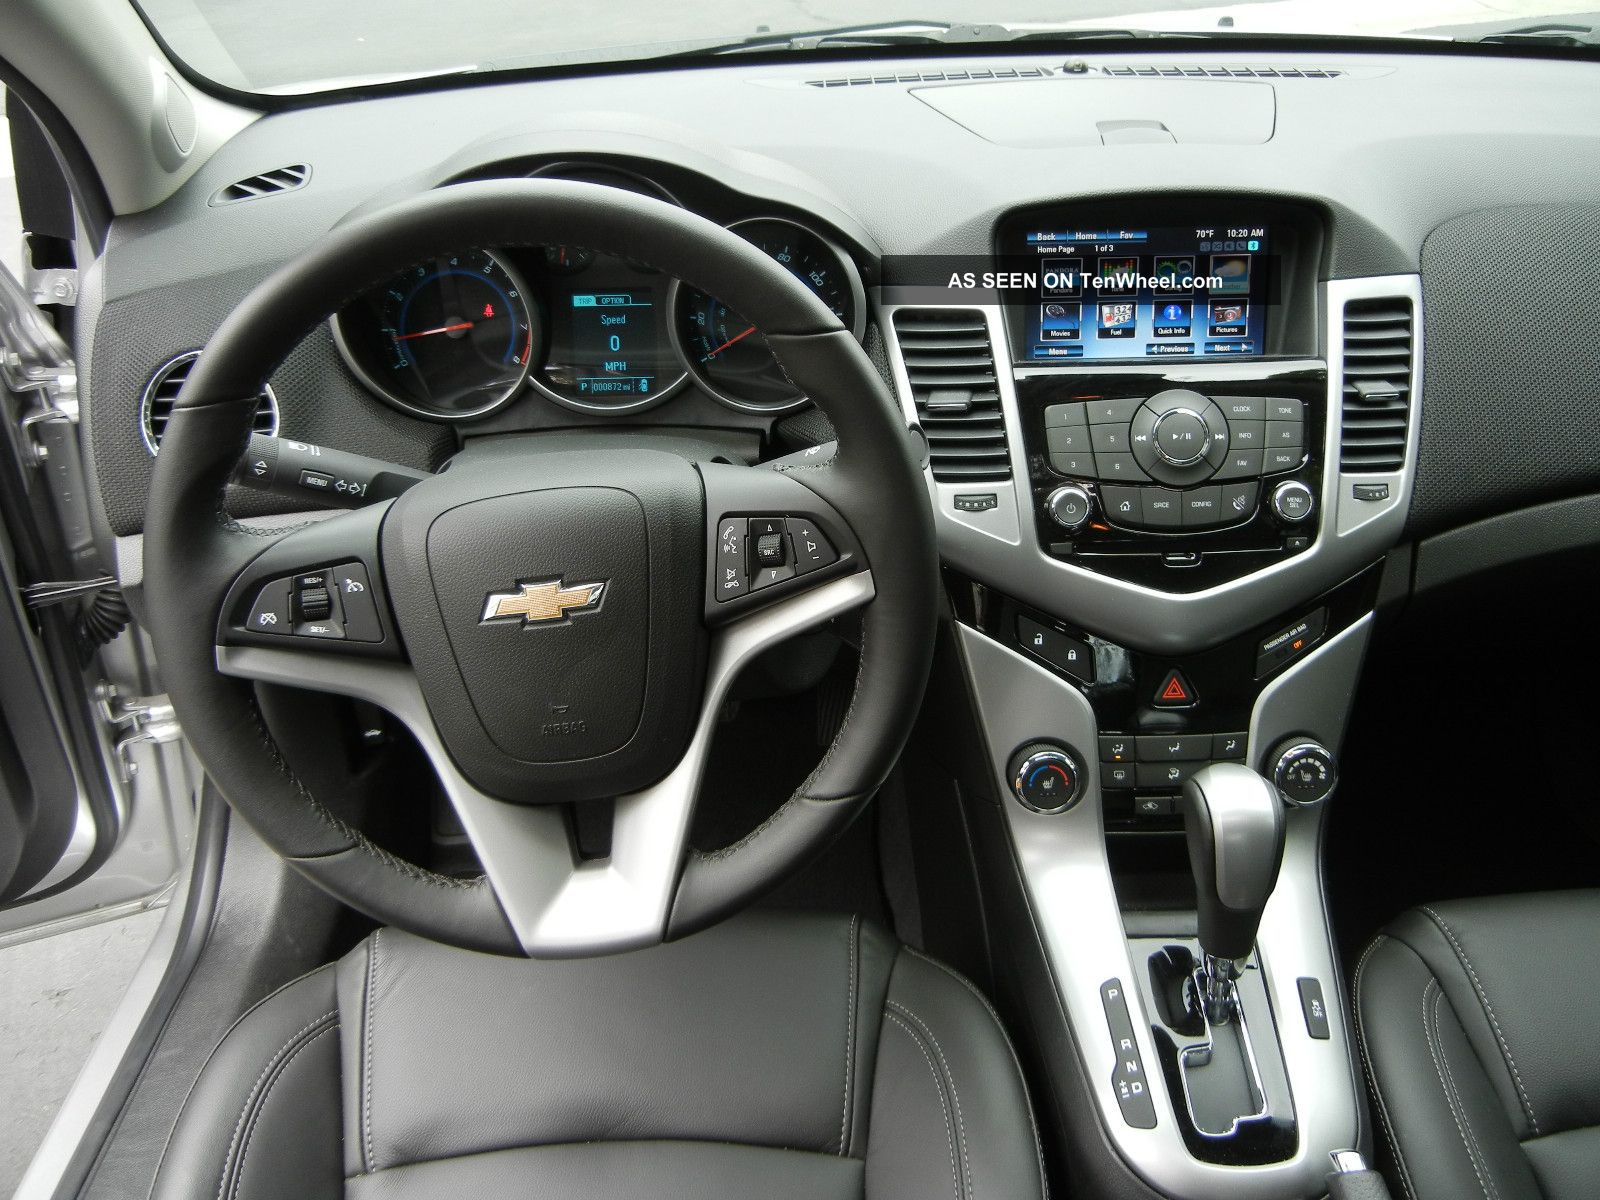 2013 Chevrolet Cruze 2 Lt W Seats And Mylink Pandora